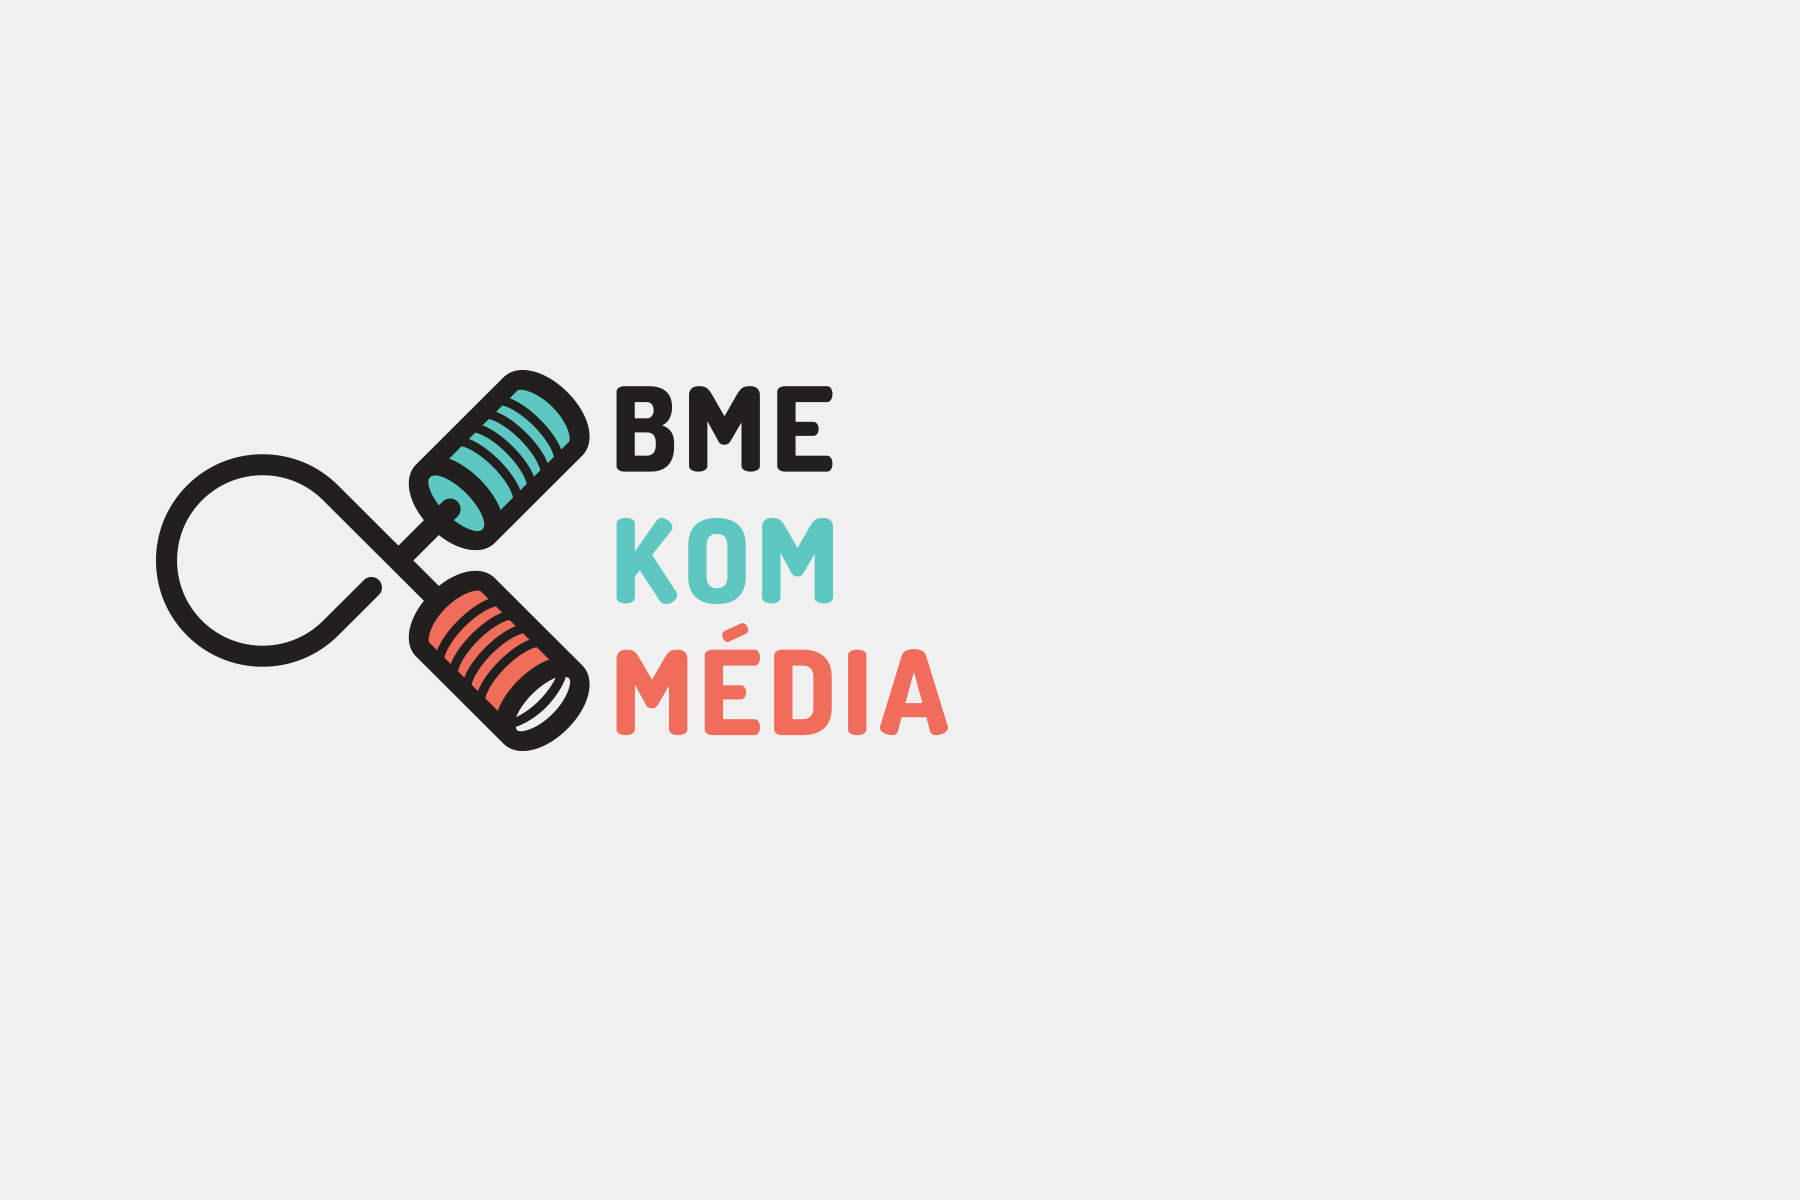 BME logo animation